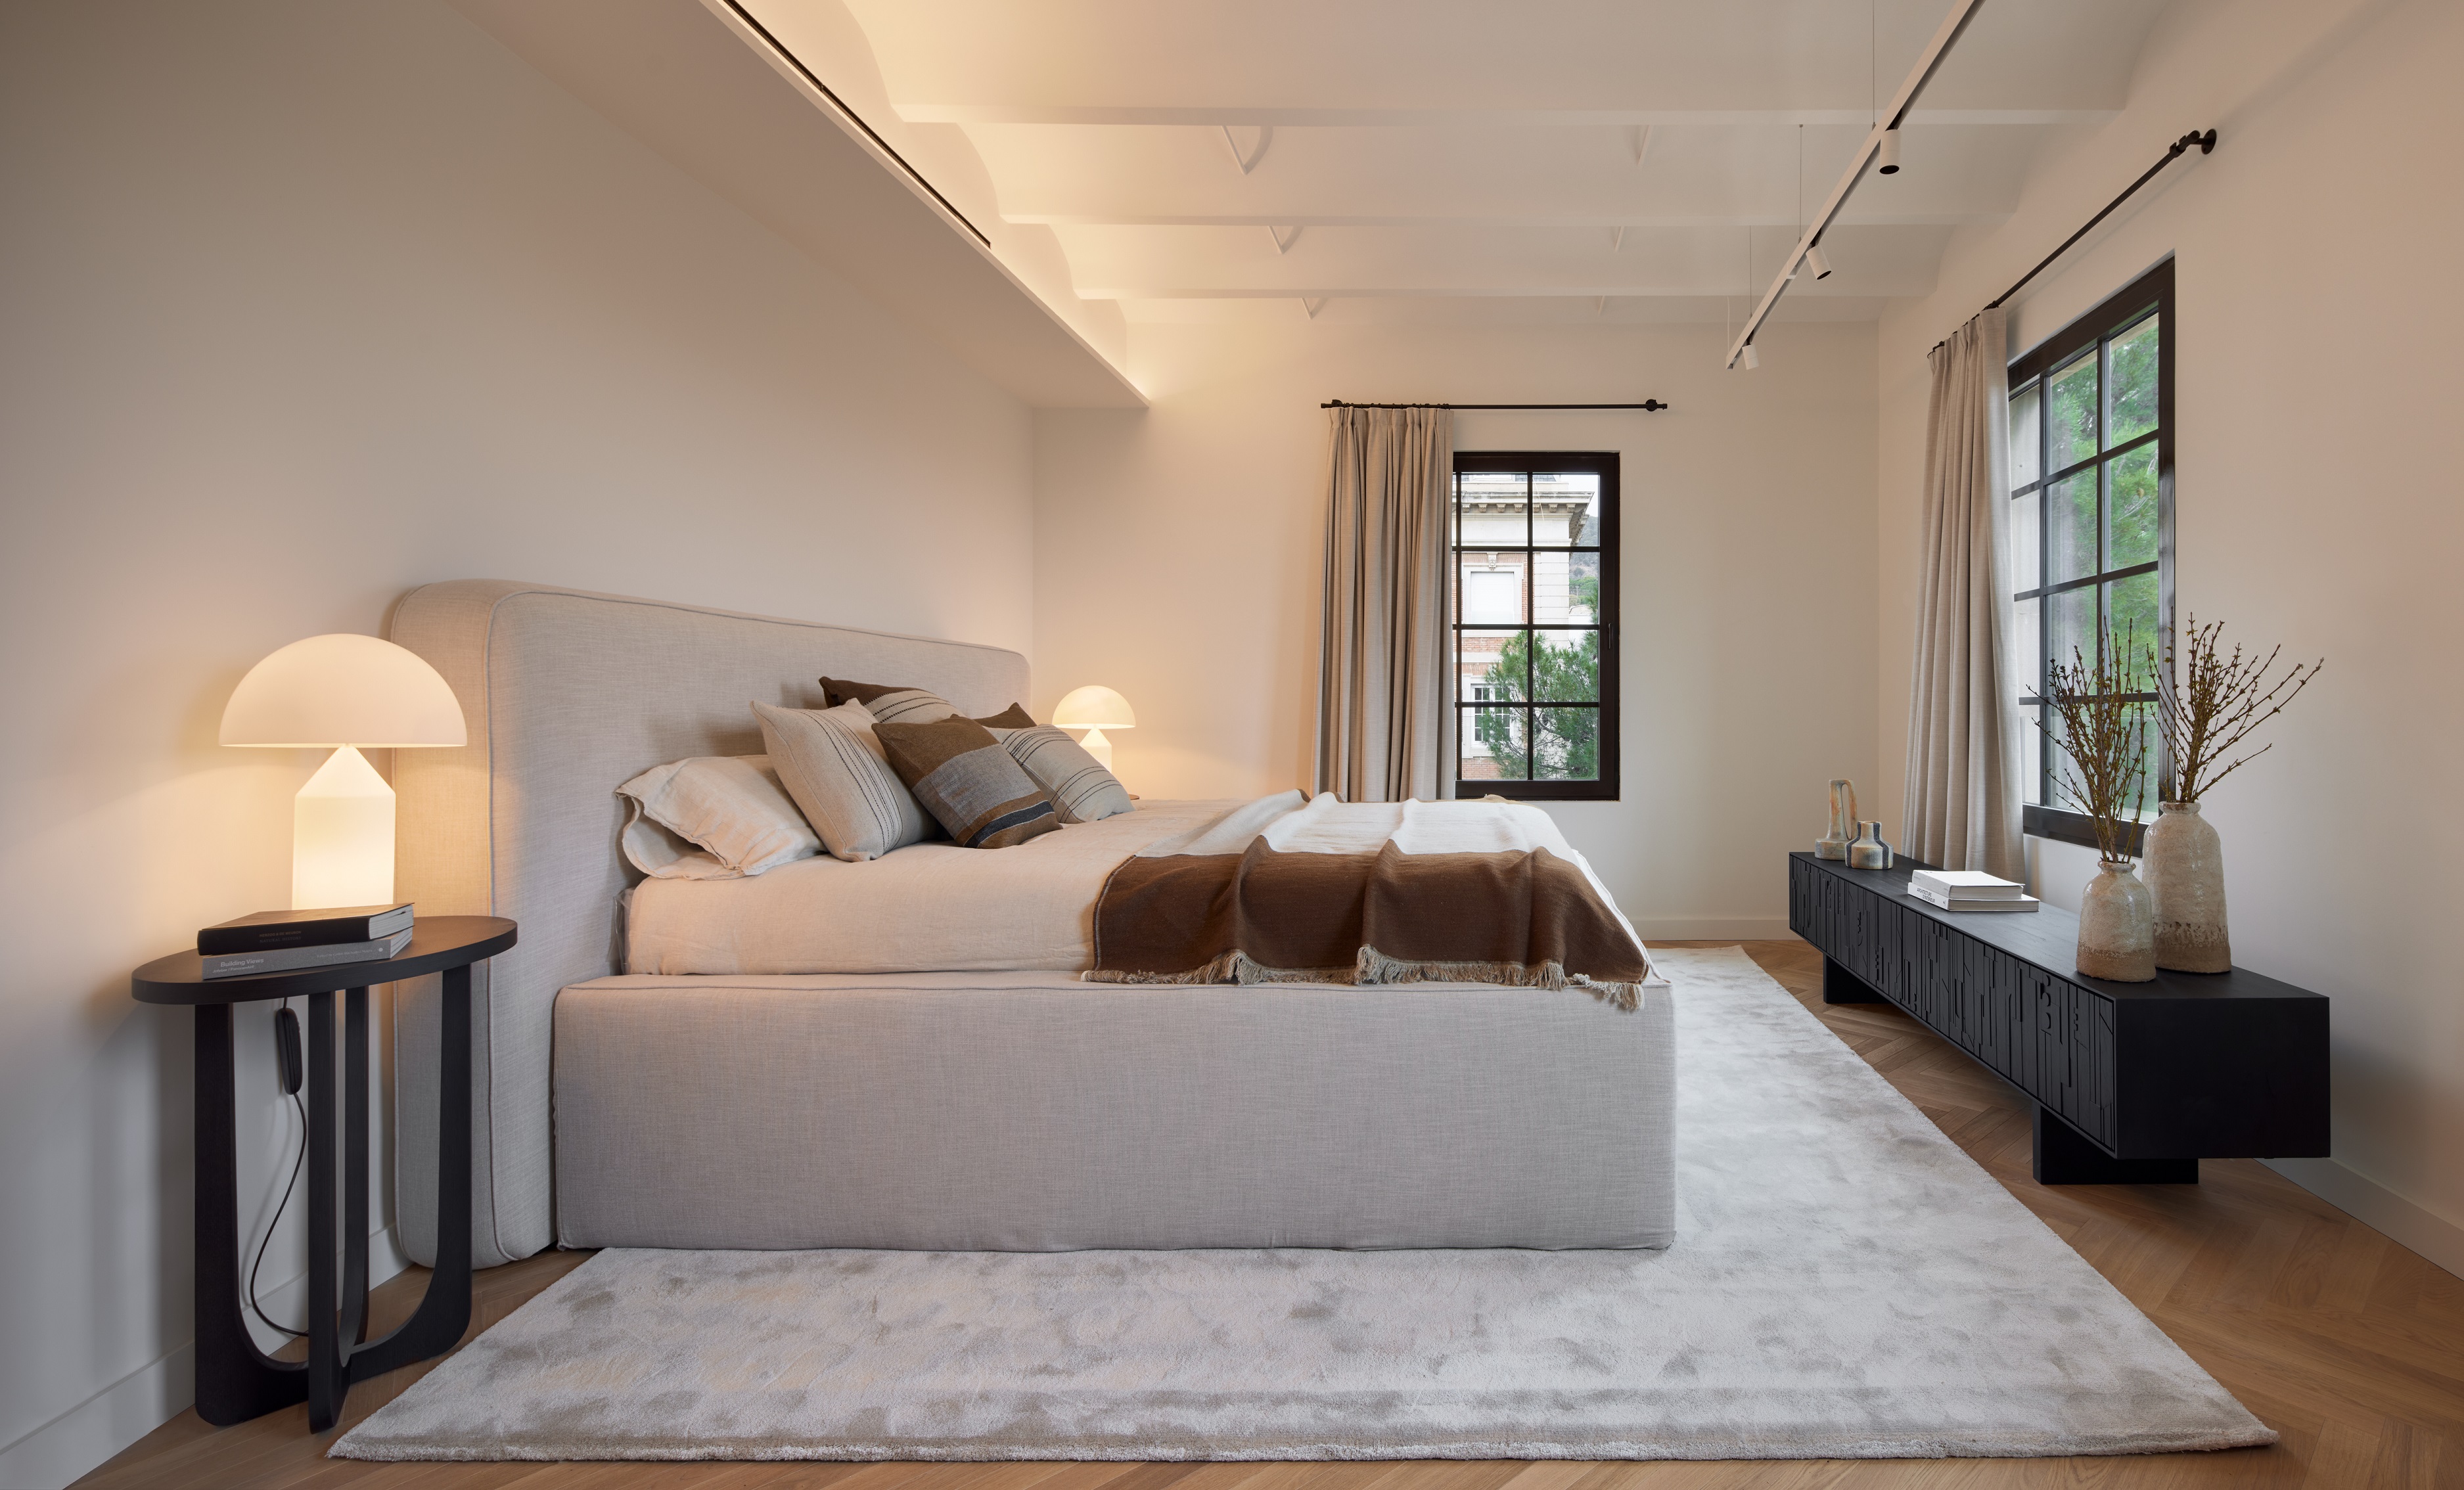 Pedralbes AV. Penthouse LUV Studio Master Bedroom 1 - LUV Studio - Architecture et design - Barcelone